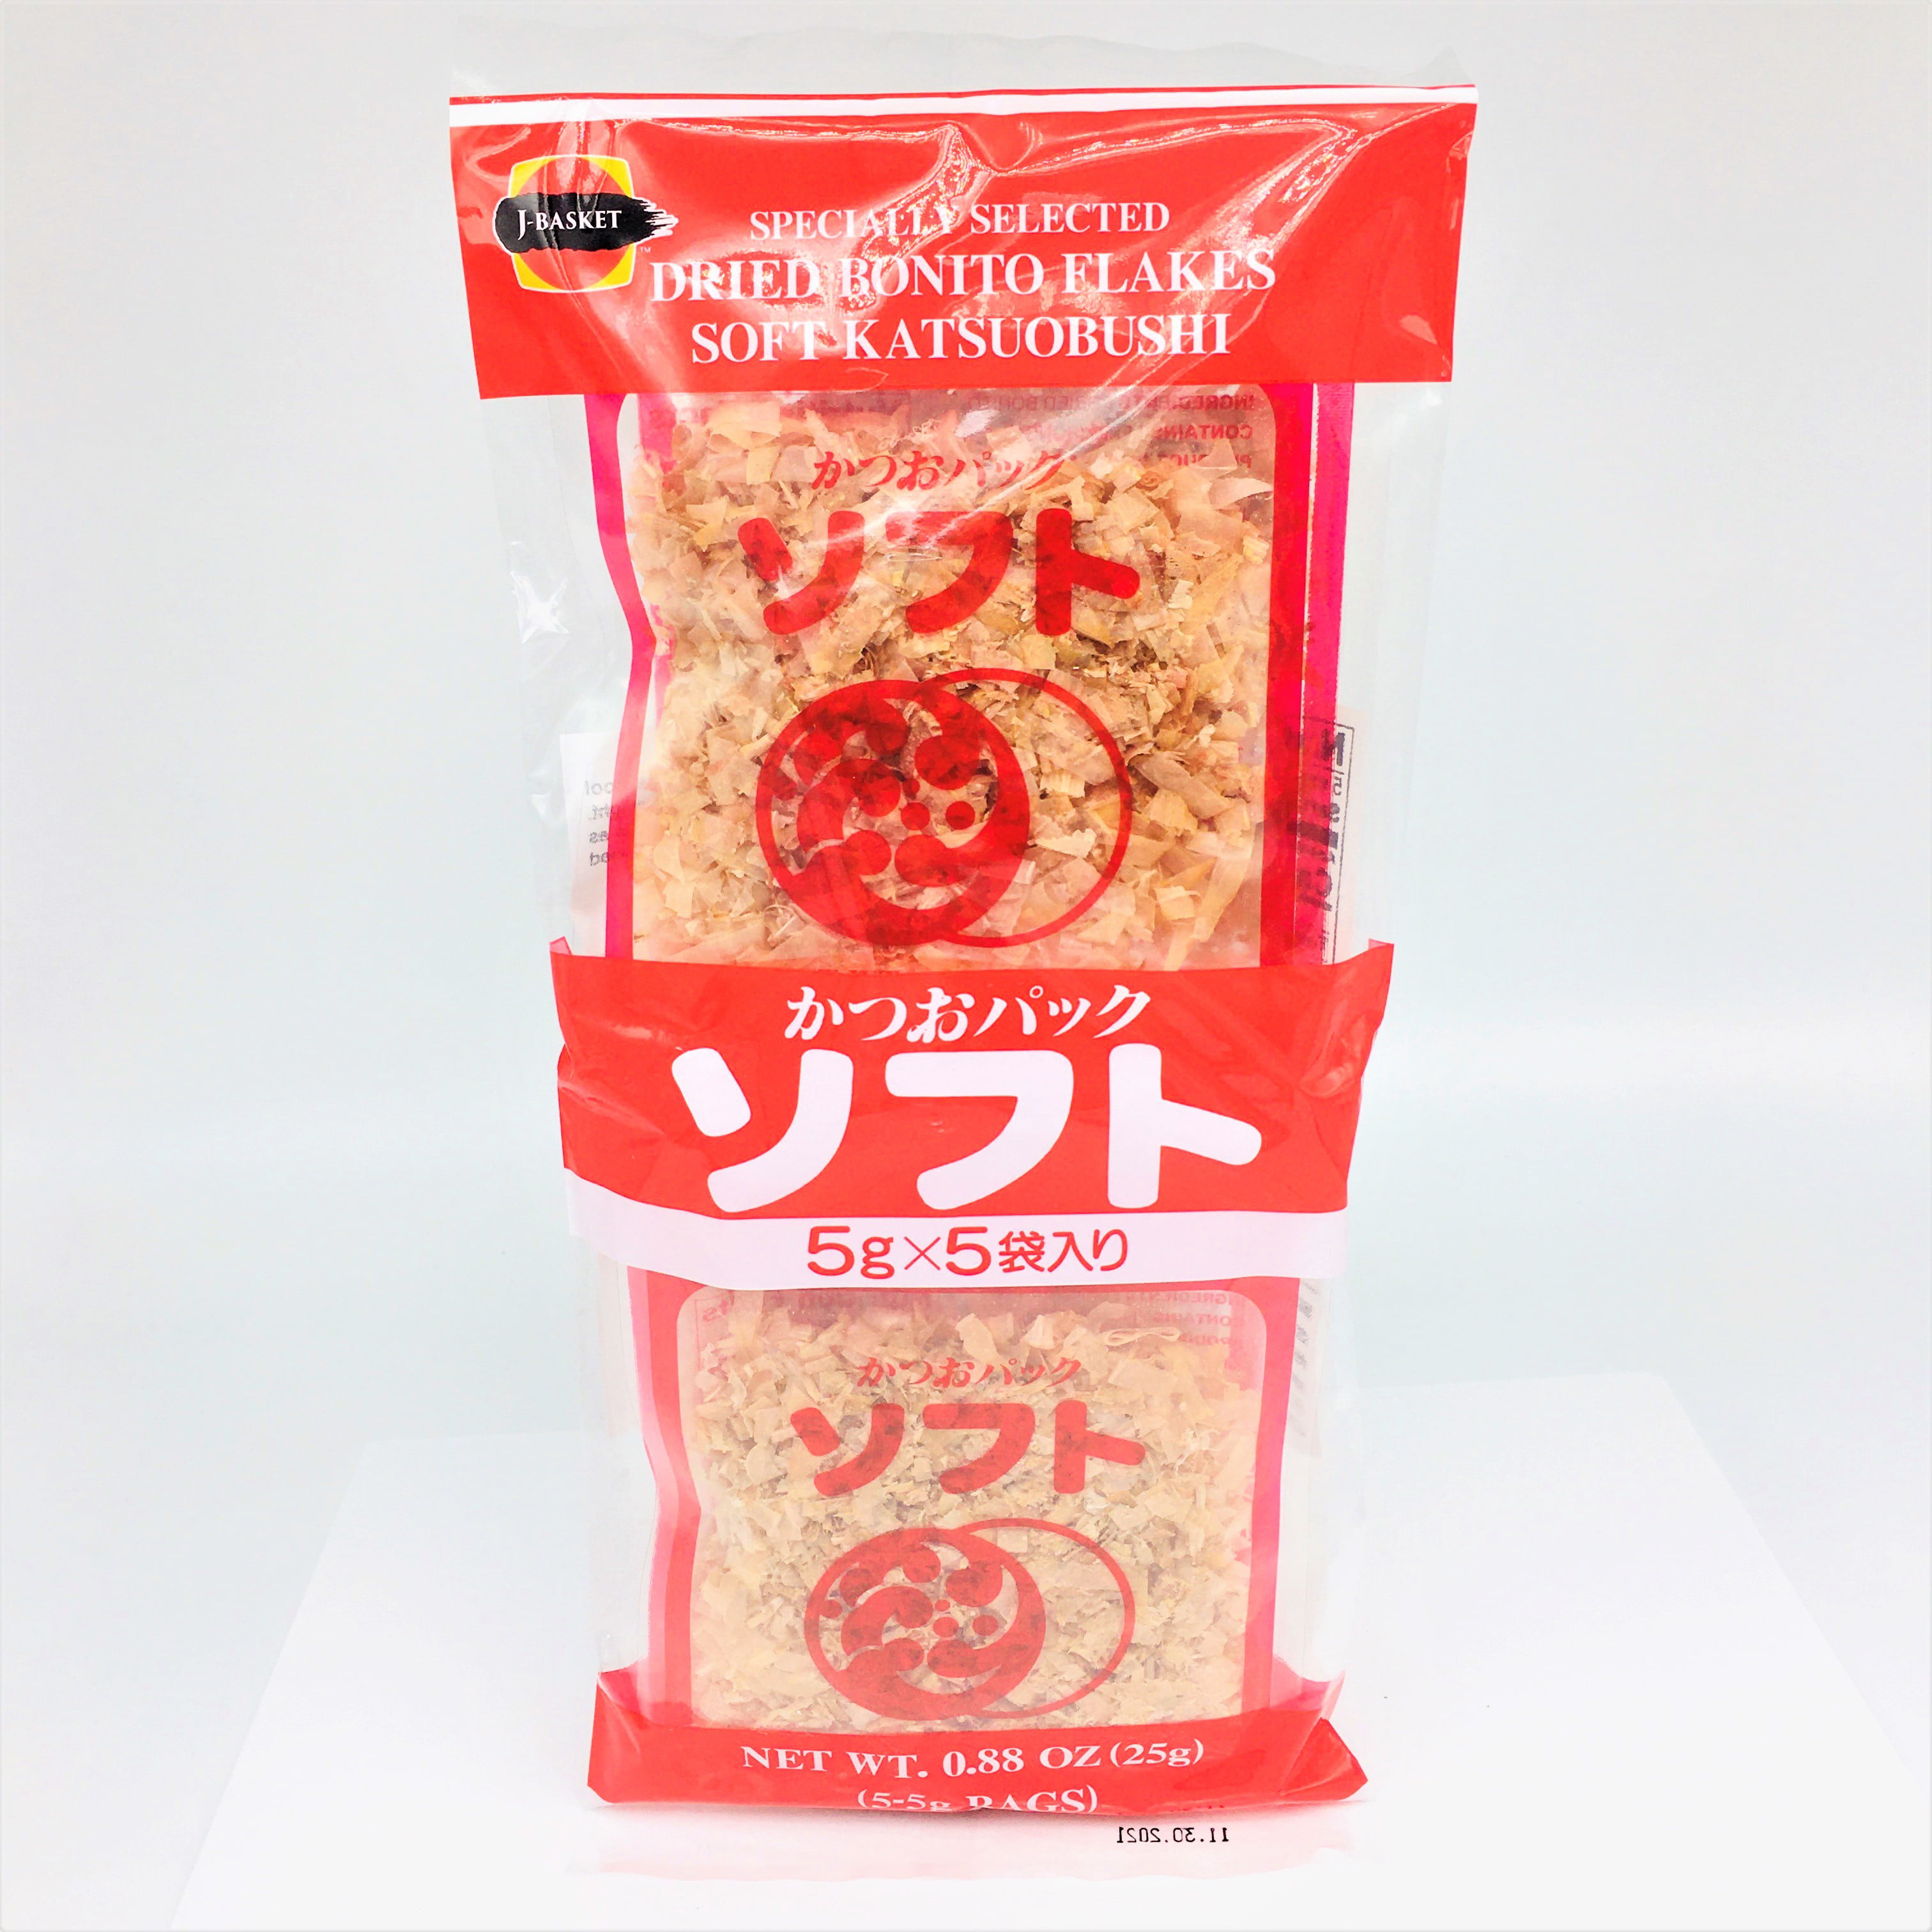 Katsuobushi Bonito Flakes (Kohyo) 25g